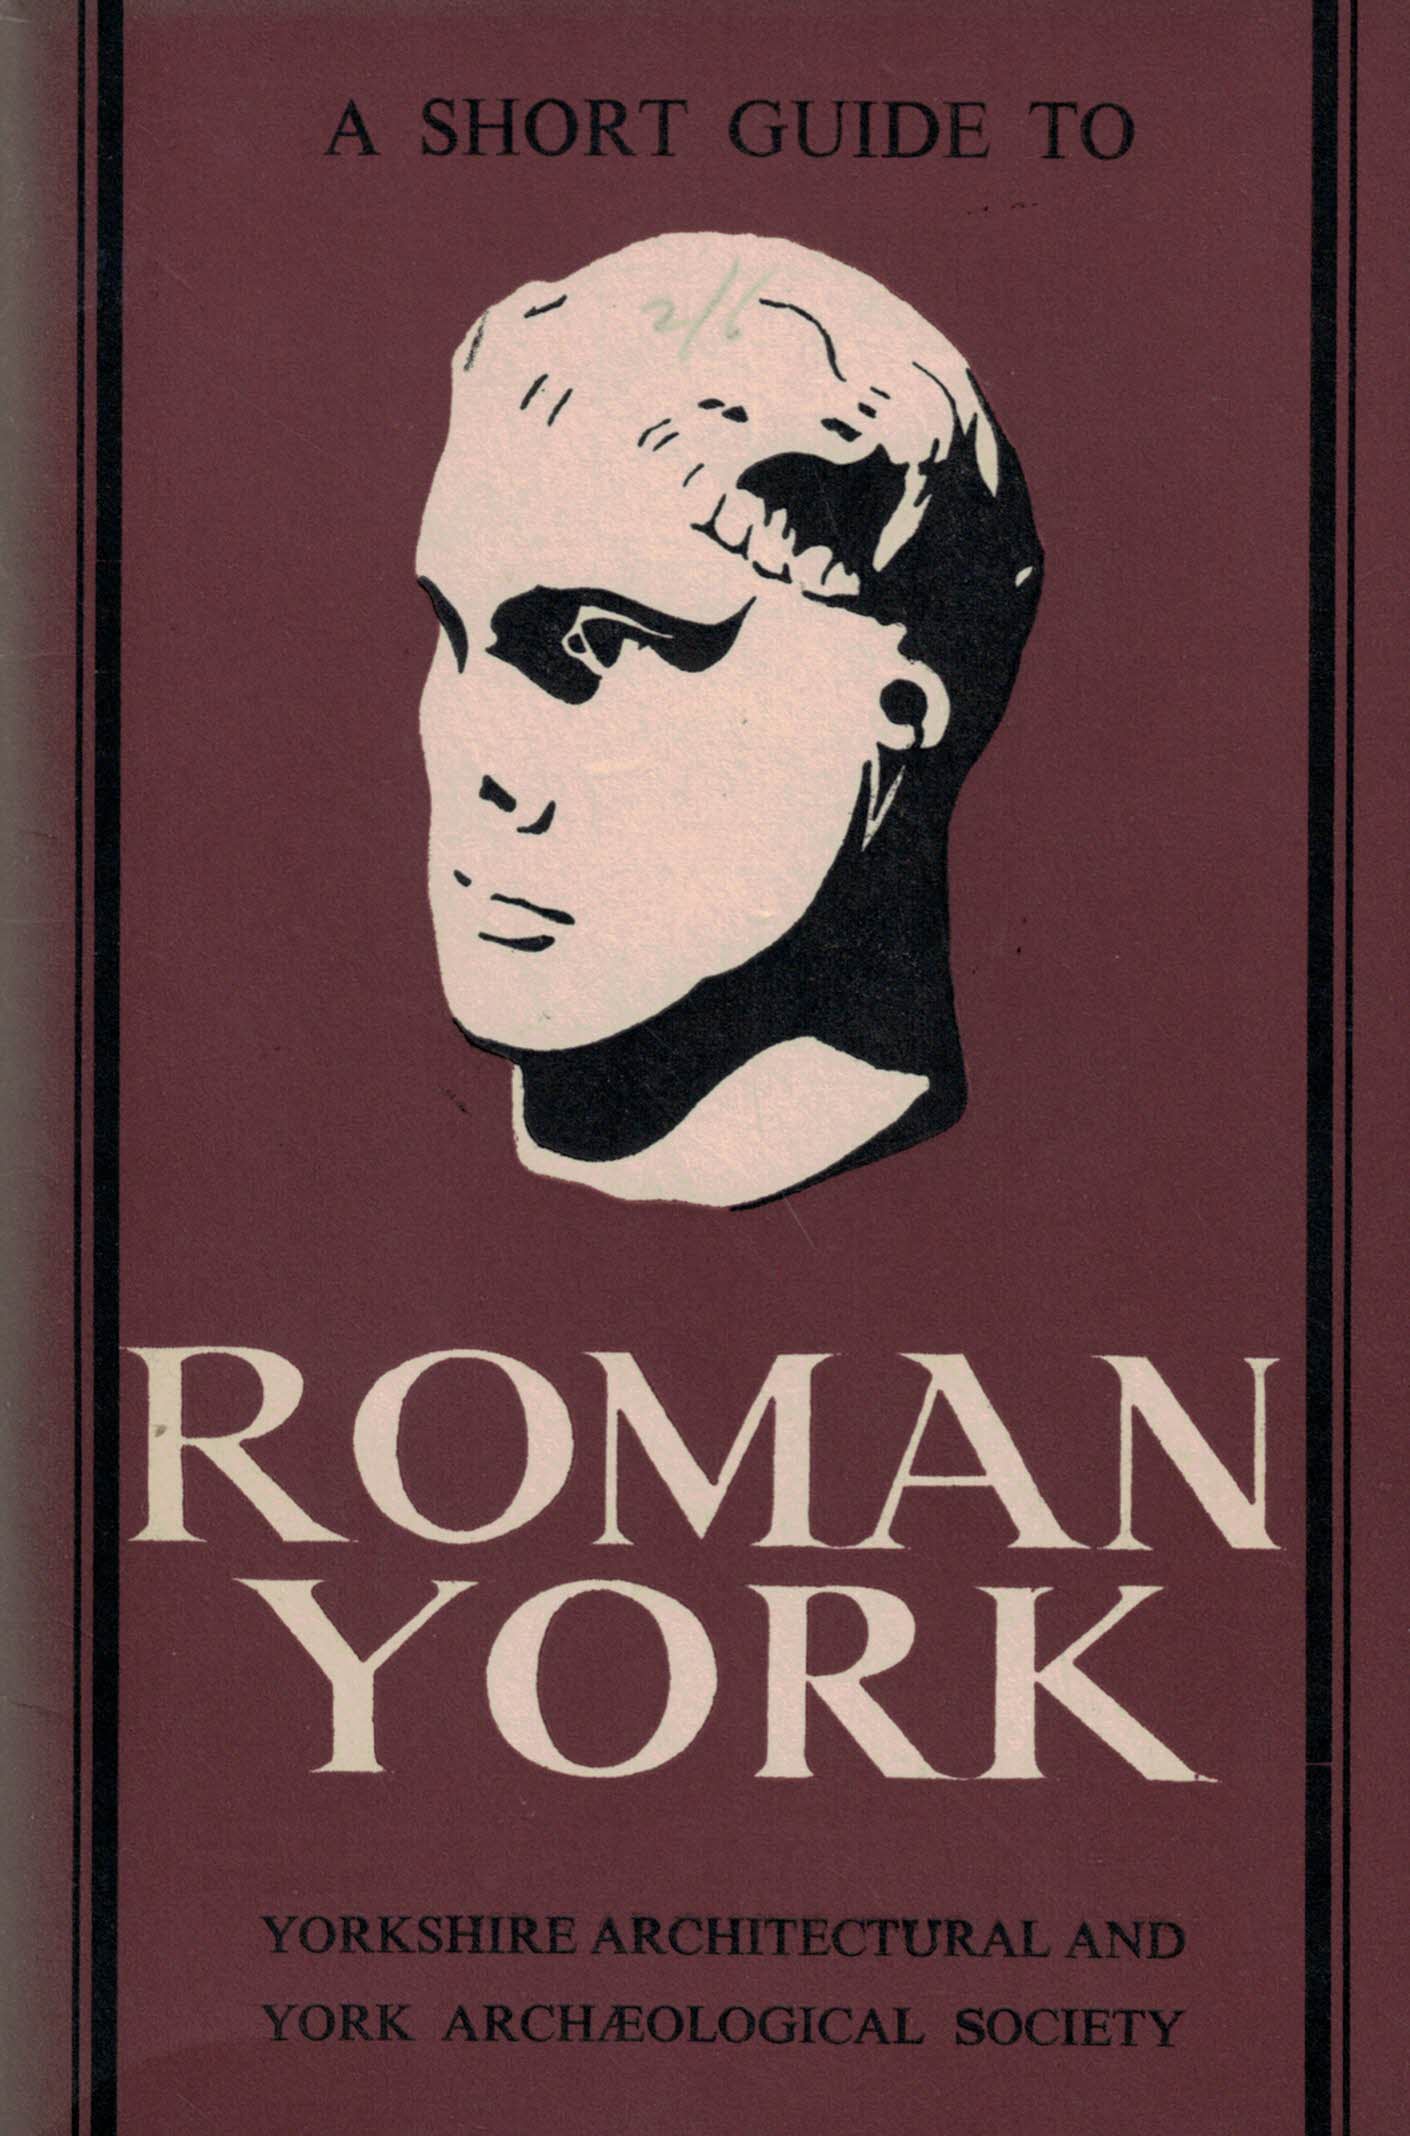 WHEELER, MORTIMER [FOREWORD.] - A Short Guide to Roman York